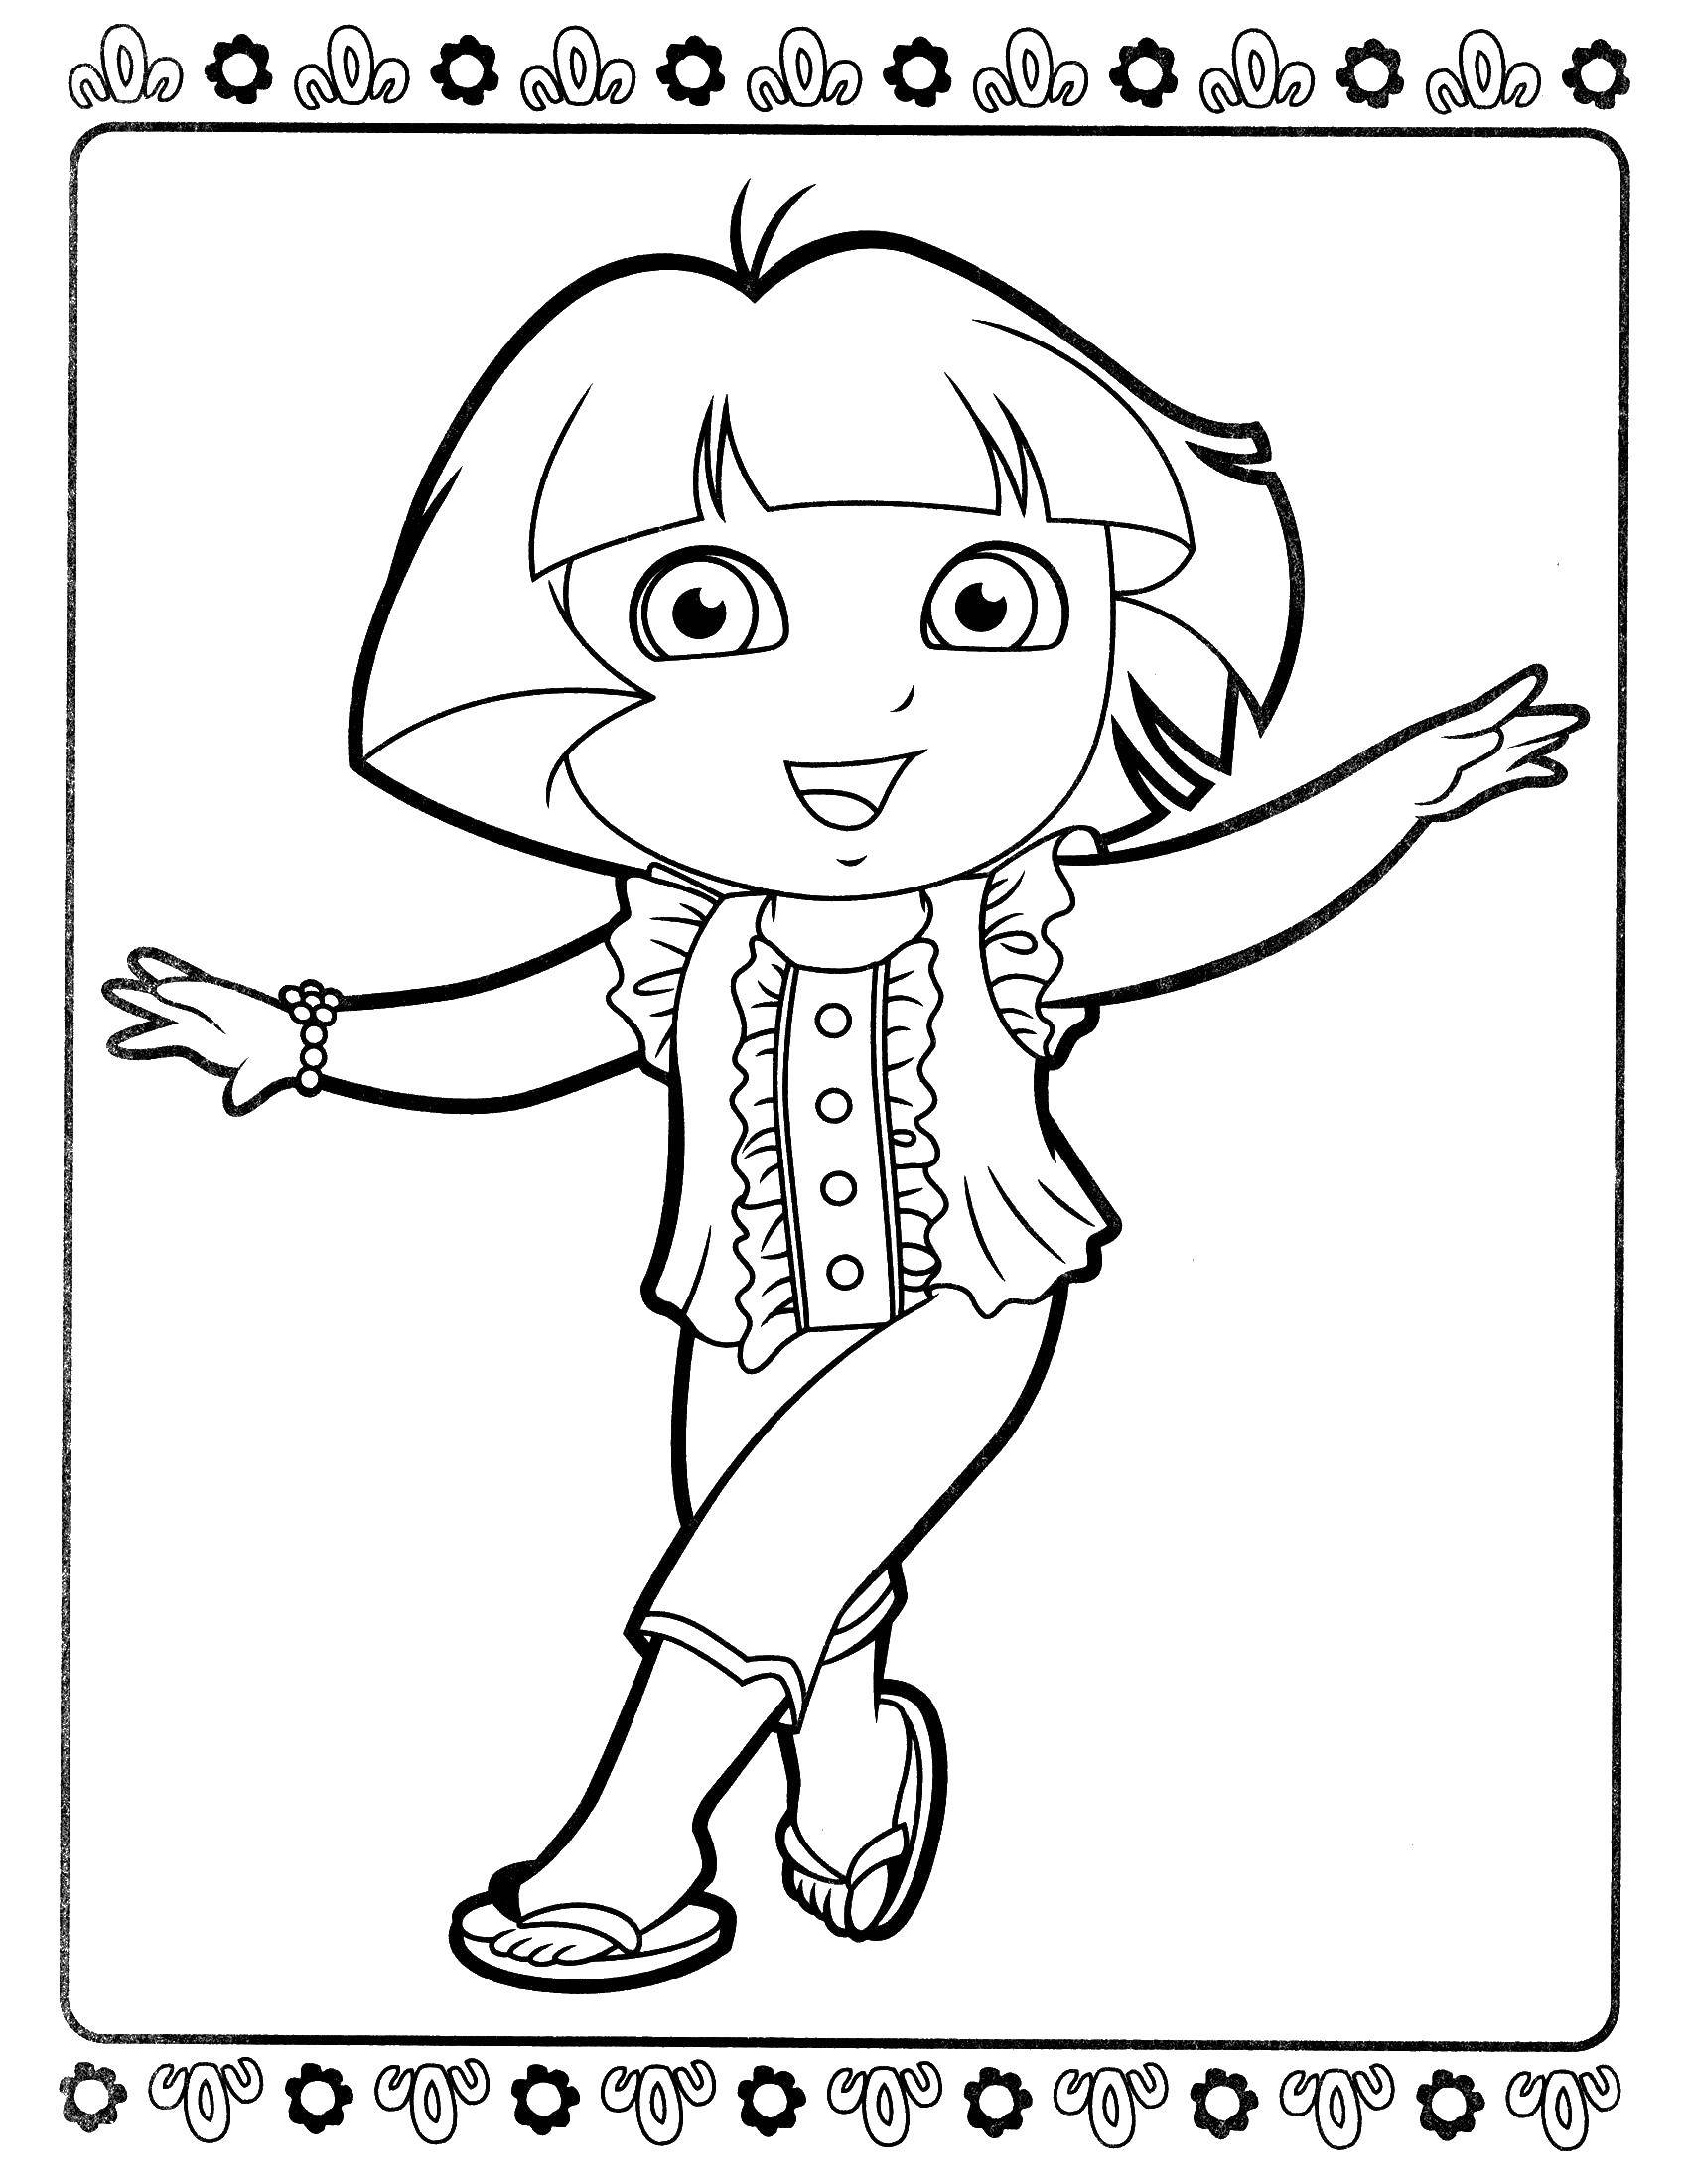 Coloring Dance Dashi. Category Dasha traveler. Tags:  Cartoon character.